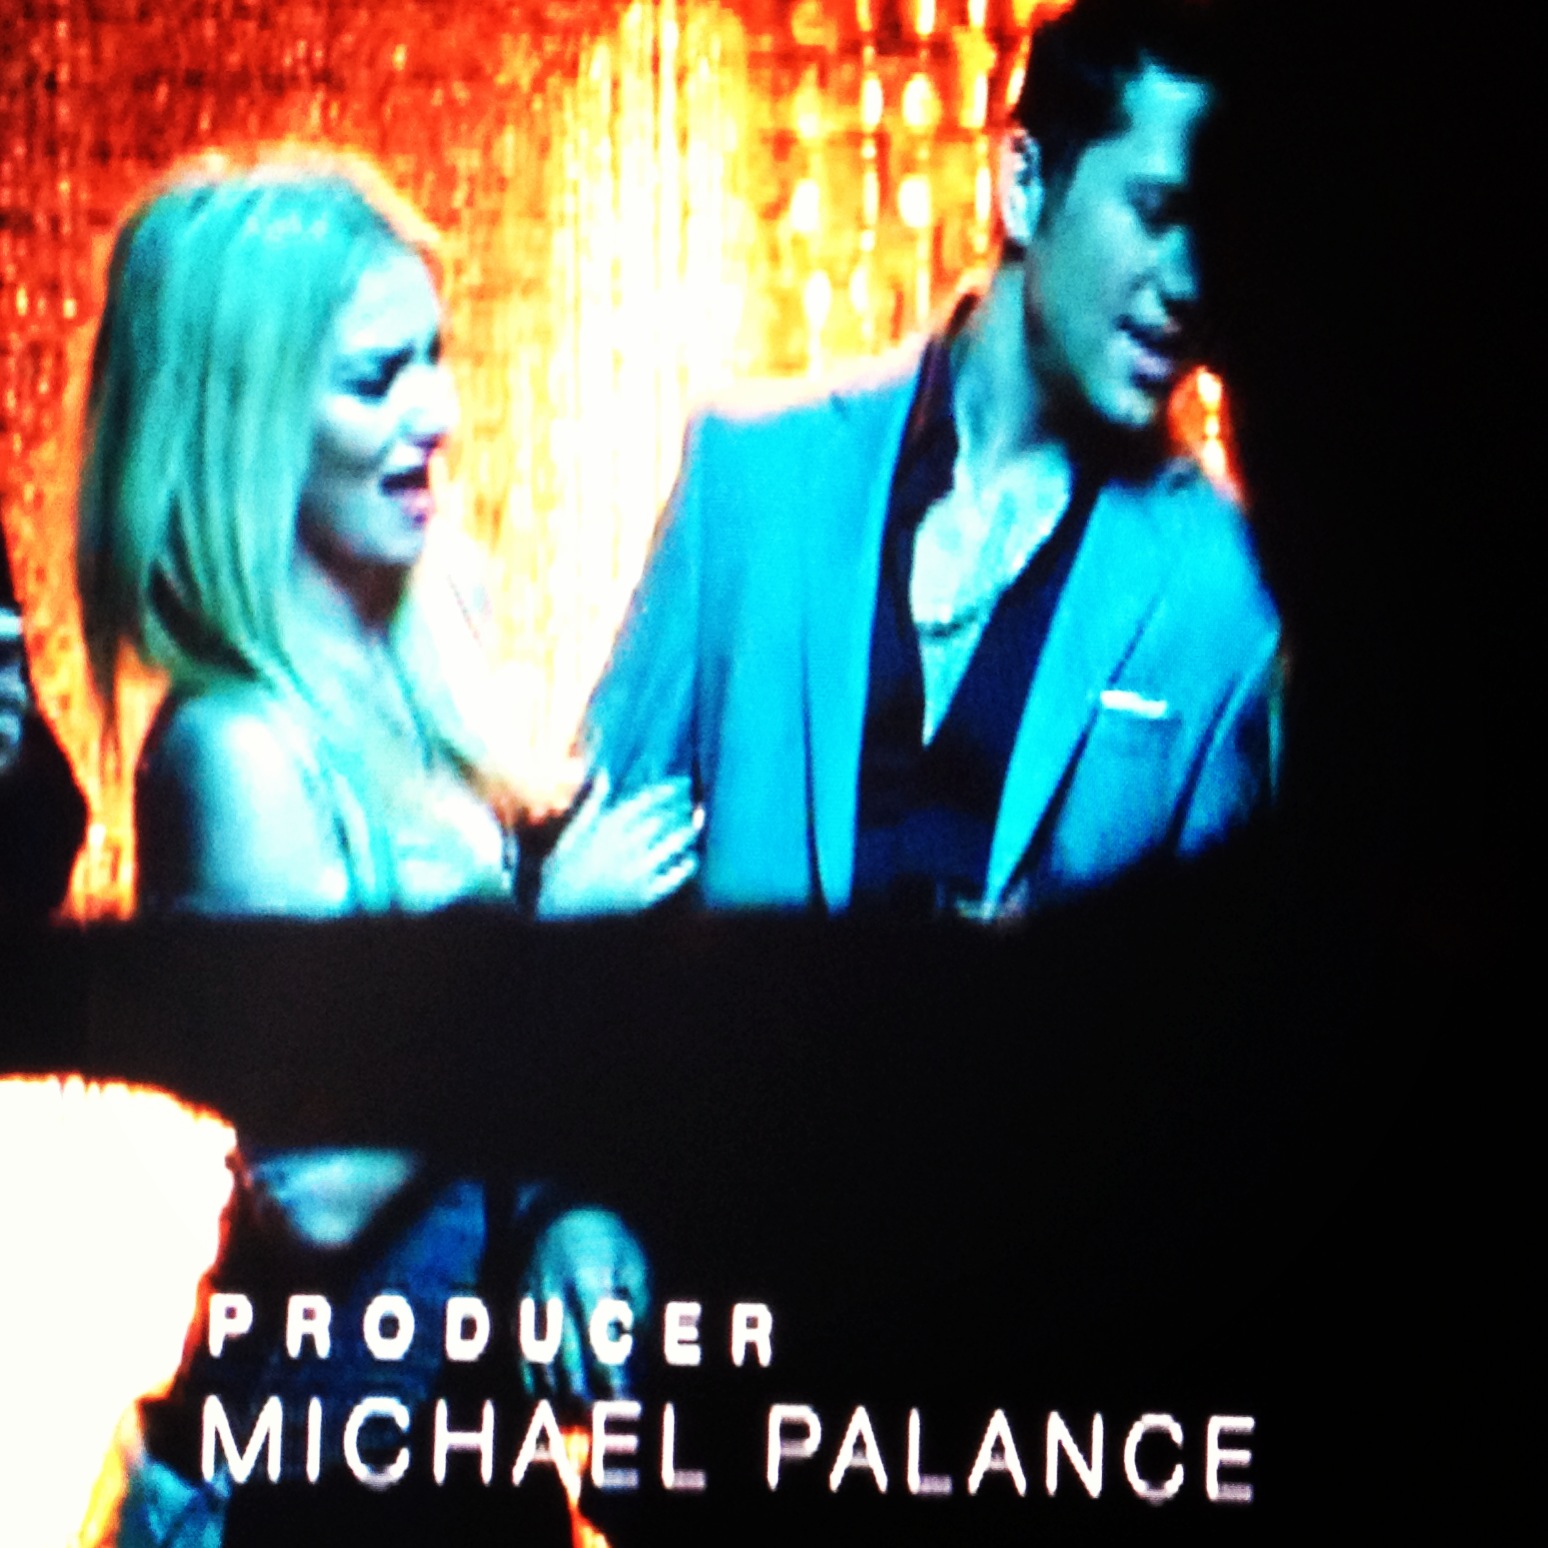 Pop Star Producer Michael Palance